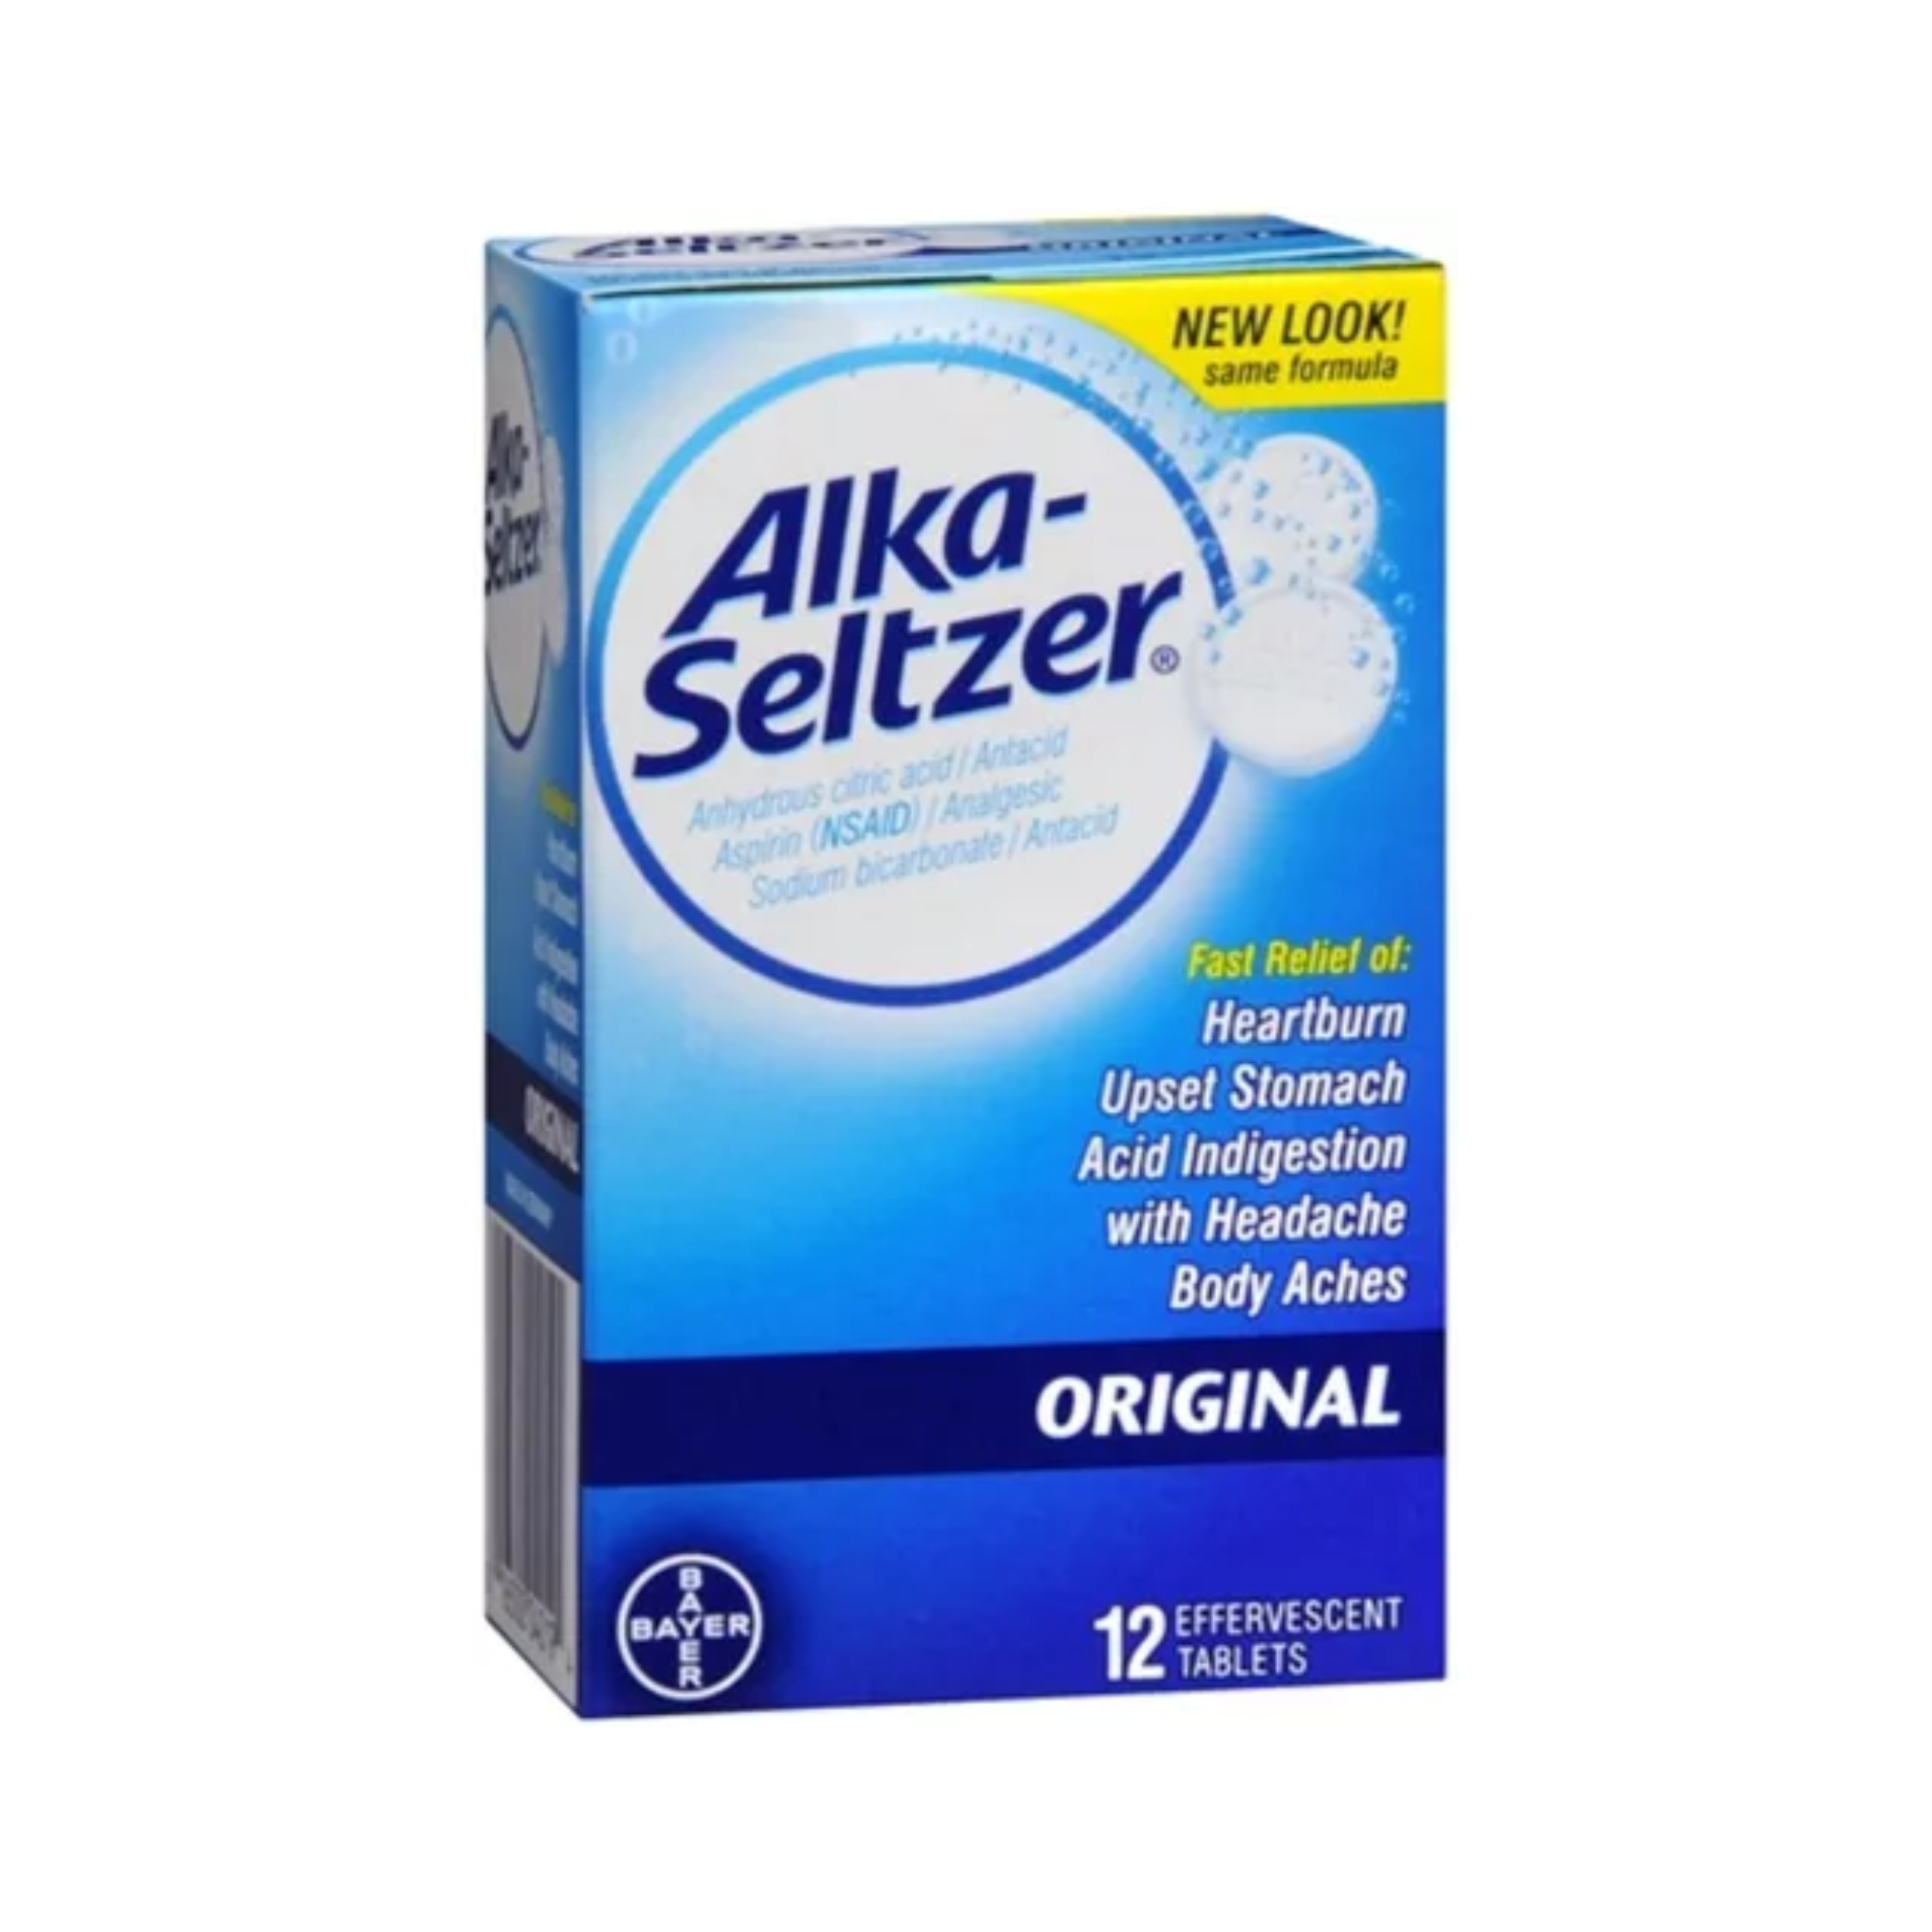 Alka-Seltzer Original 12 Tabletas Efervescentes